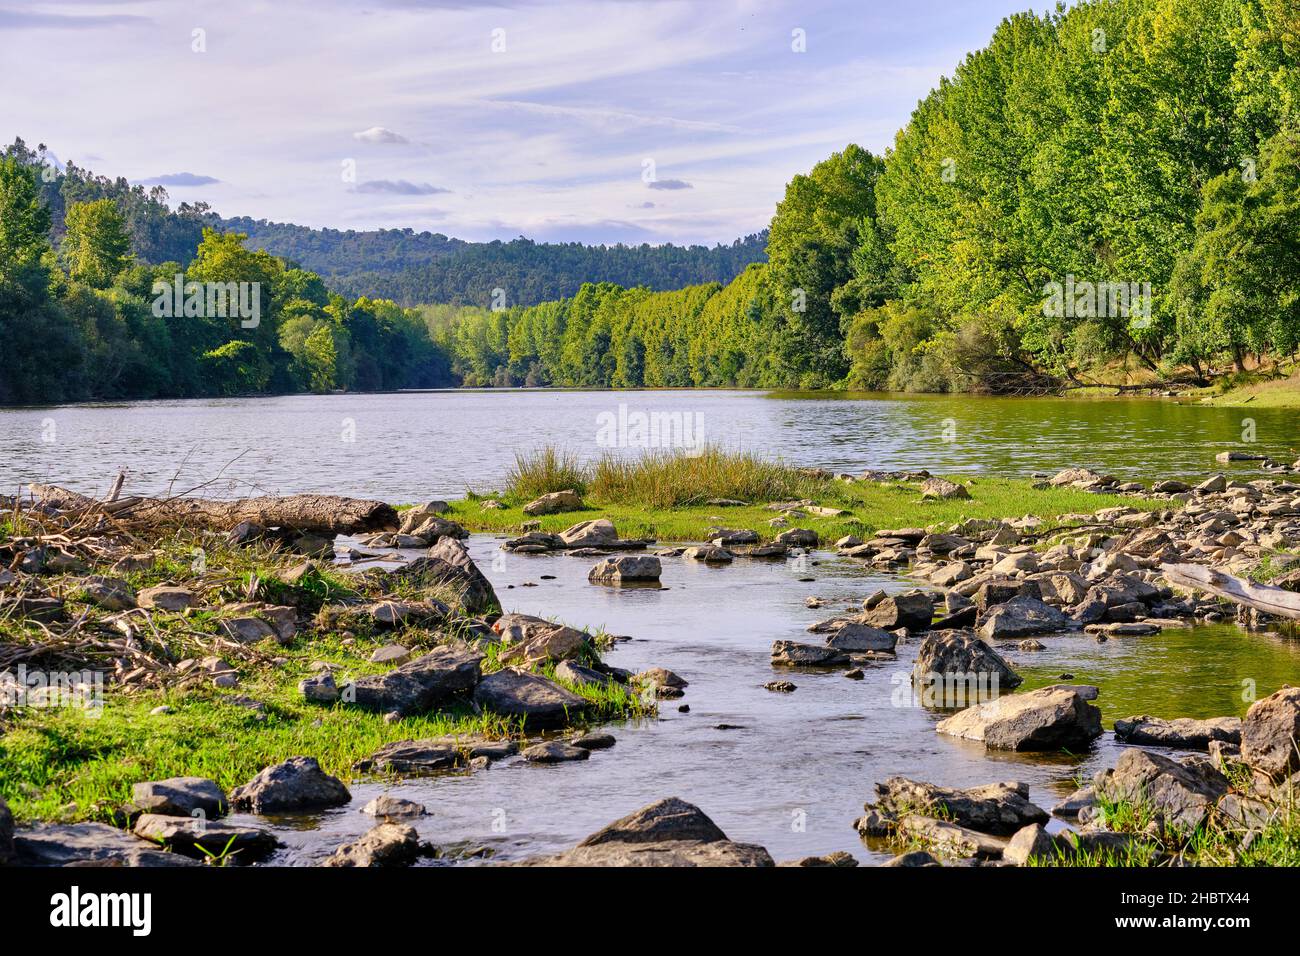 The Tua river at Frechas in Autumn. Vale do Tua Regional Nature Park, Mirandela. Portugal Stock Photo